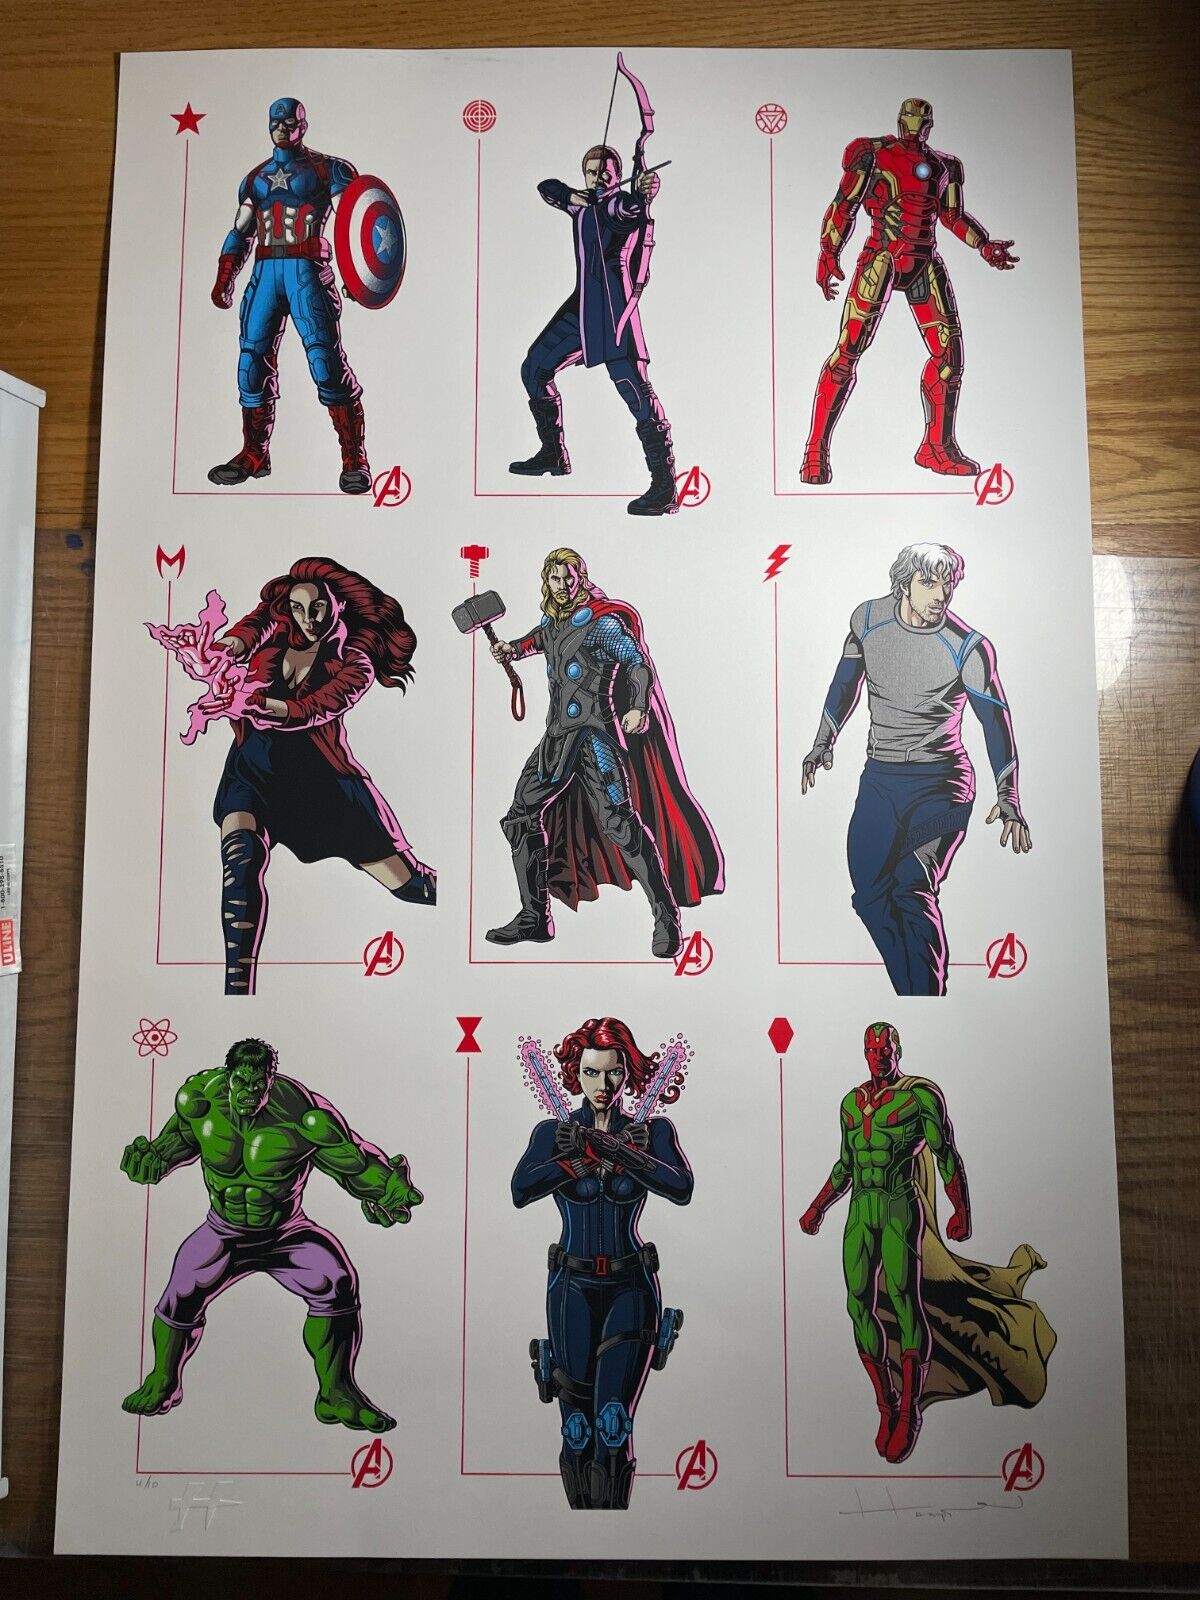 Justin Hampton Art Print Poster Avengers Age of Ultron Uncut Edition of 10